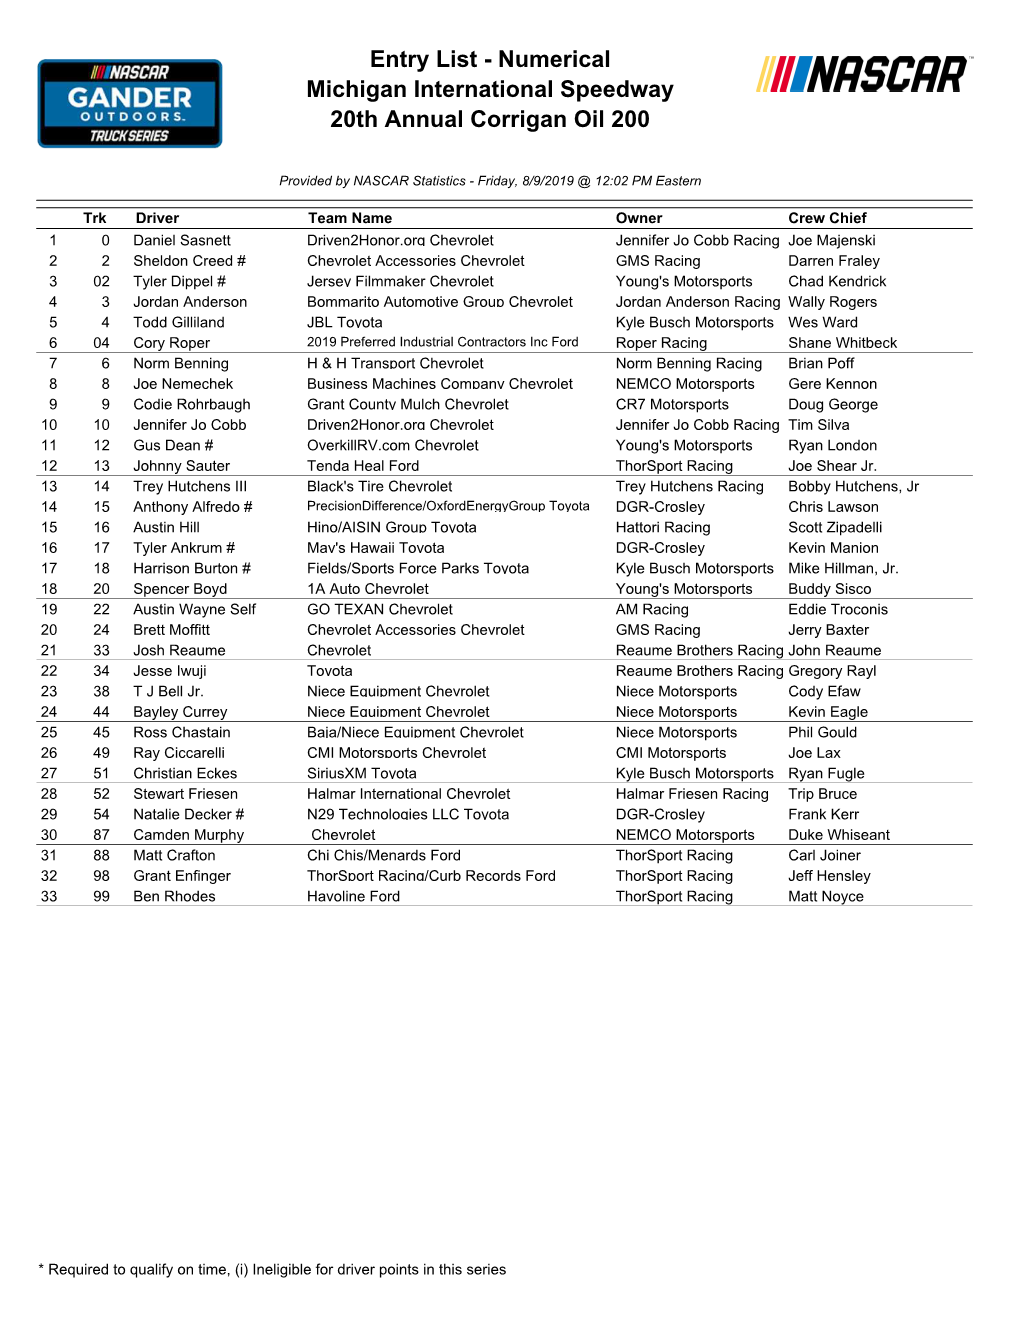 Entry List - Numerical Michigan International Speedway 20Th Annual Corrigan Oil 200